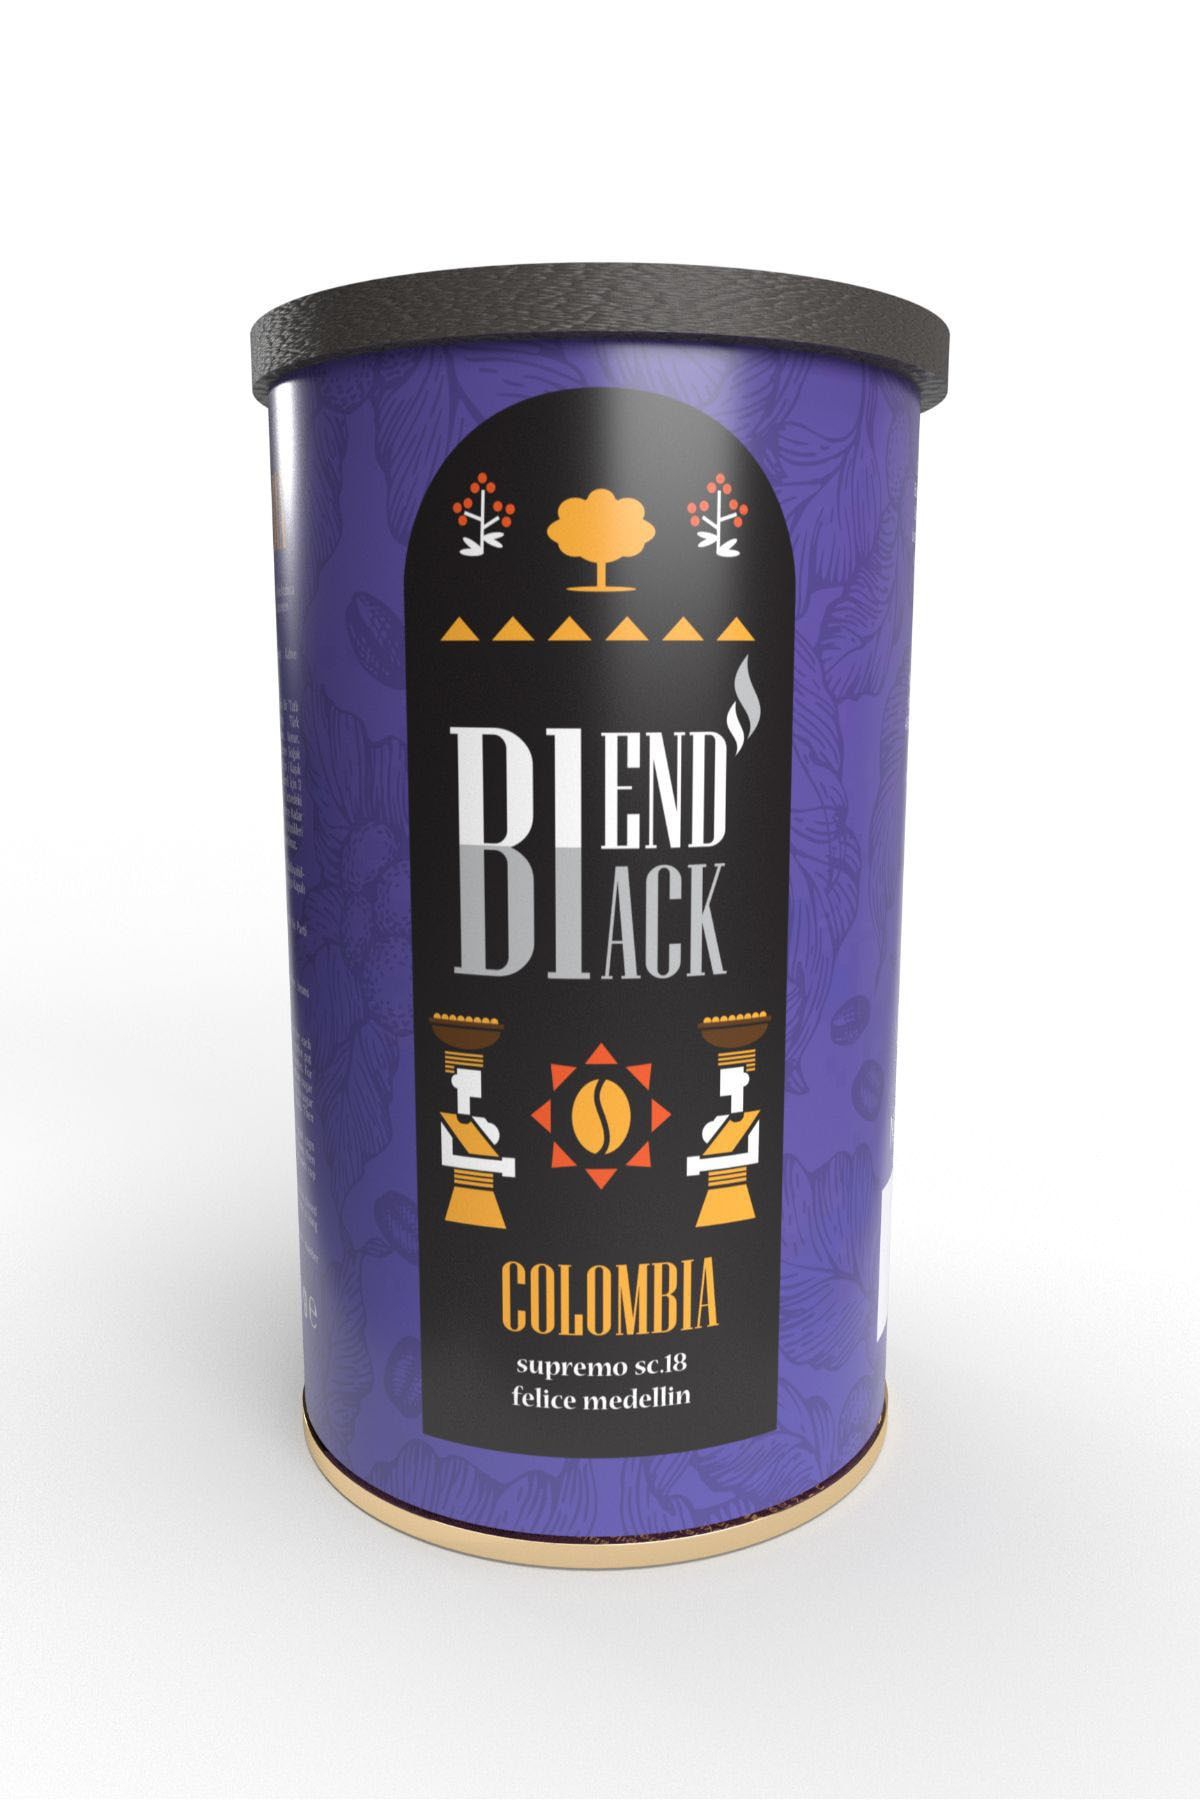 Blendblack Colombia Filtre Kahve 250Gr Teneke Kutu